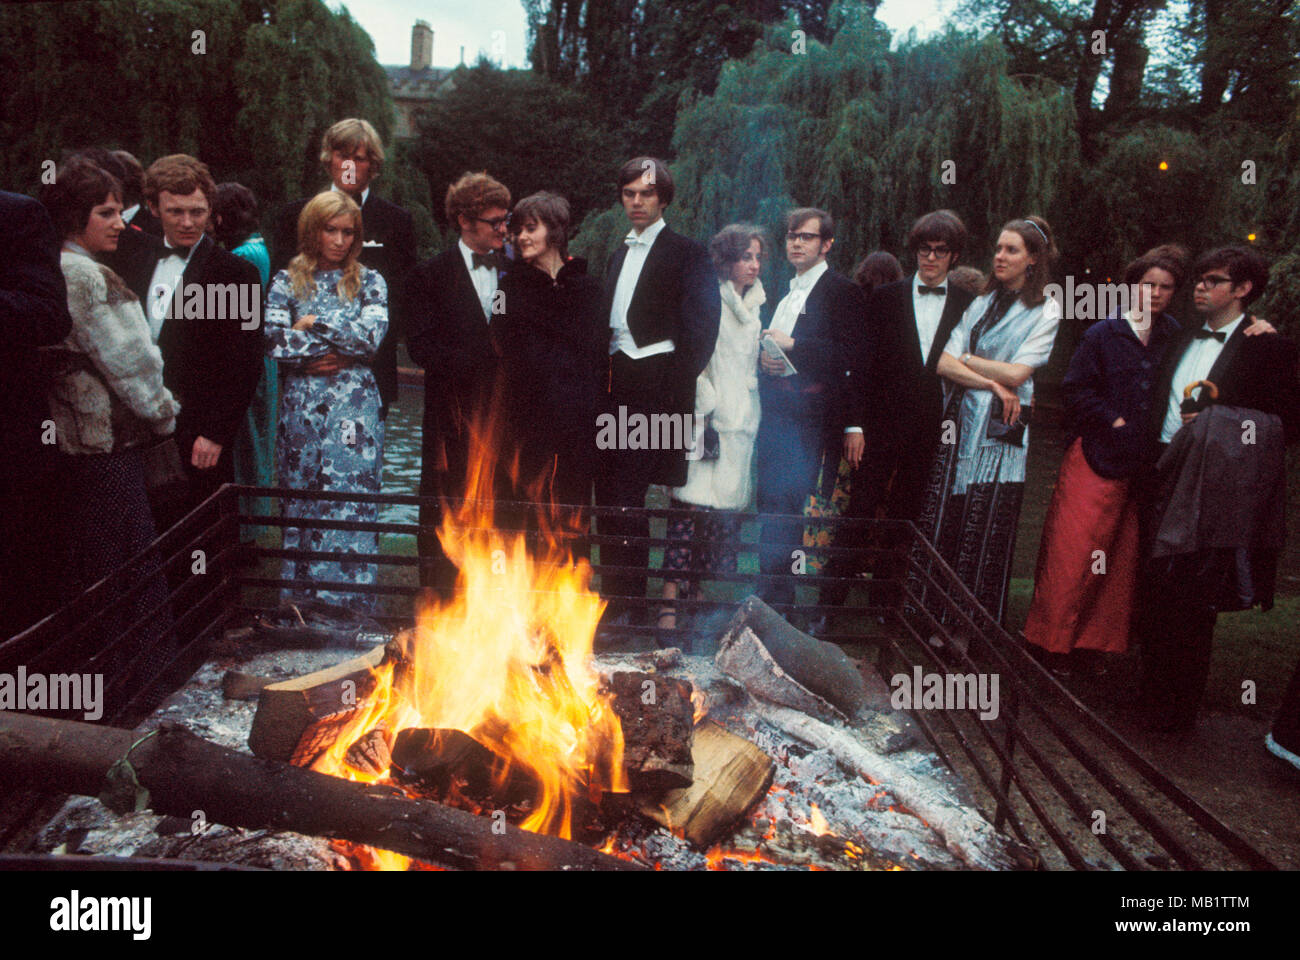 Dawn,May Ball. Trinity College Cambridge, 1971. Stock Photo